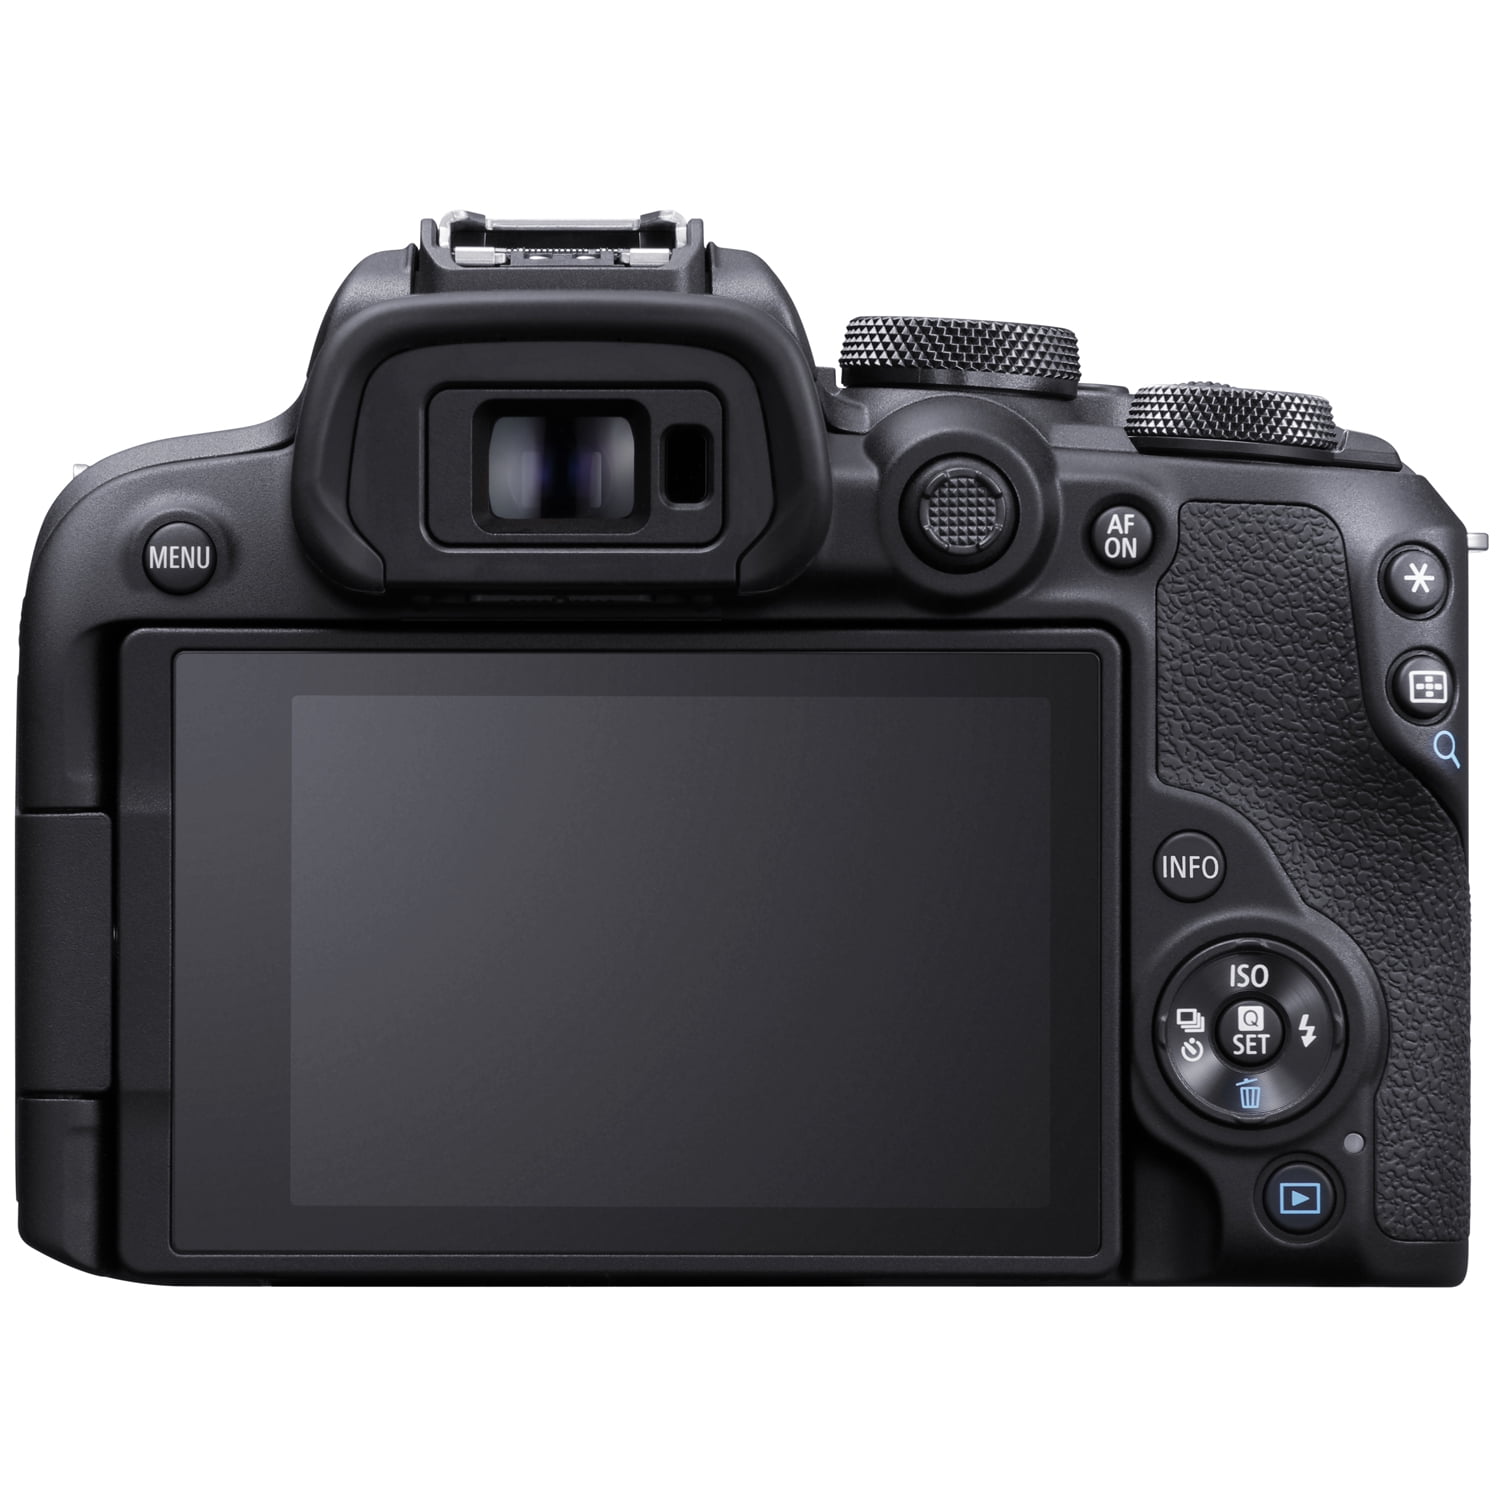 Canon R10 APS-C Mirrorless Digital Camera Body - Green Mountain Camera